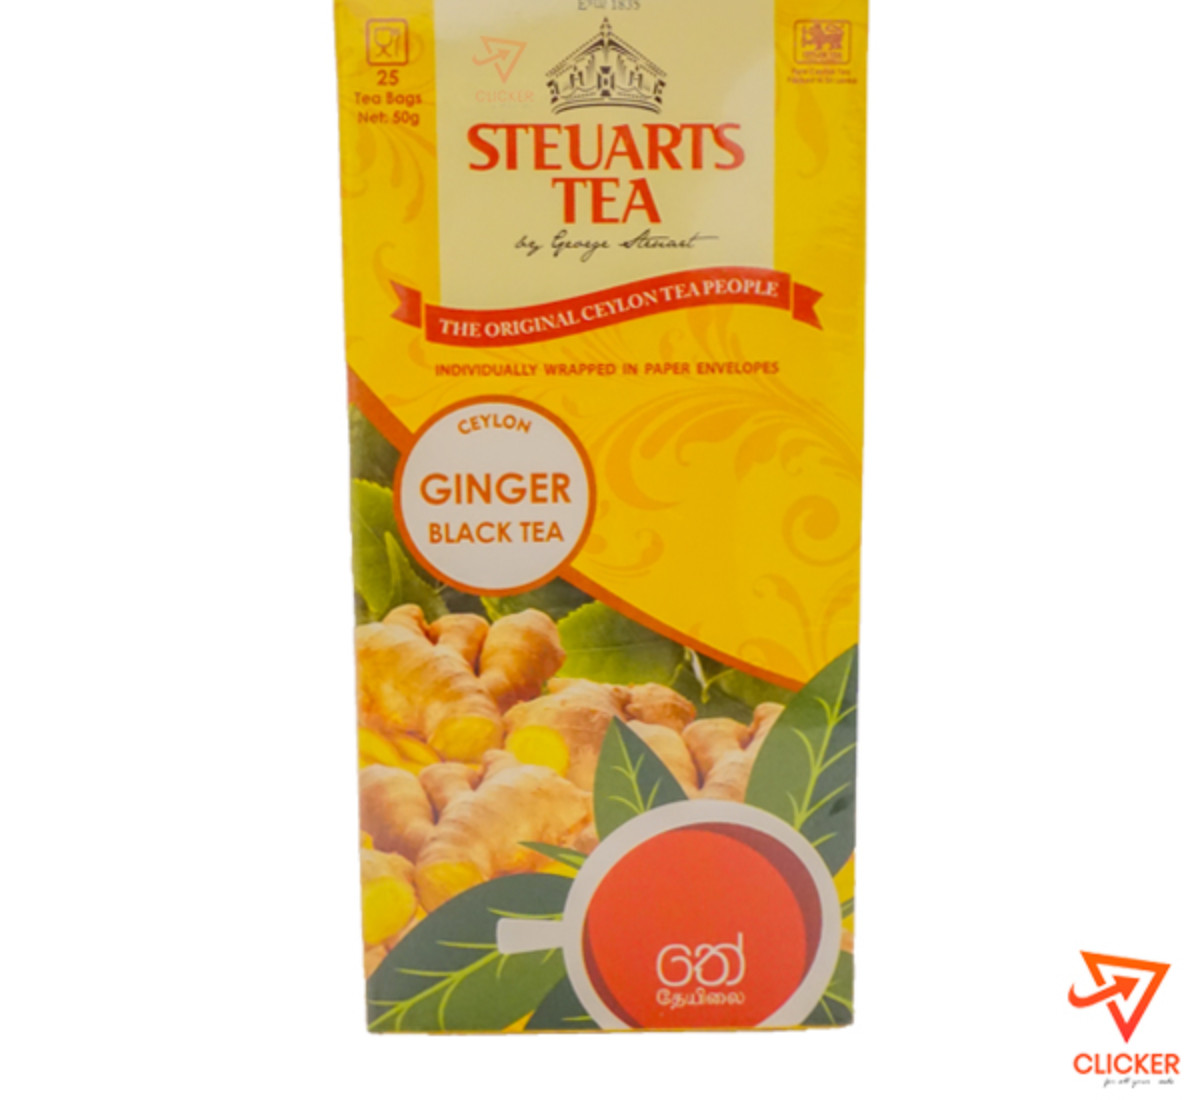 Clicker product 50g GEORGE STEURARTS tea ginger black tea(25 tea bags) 926